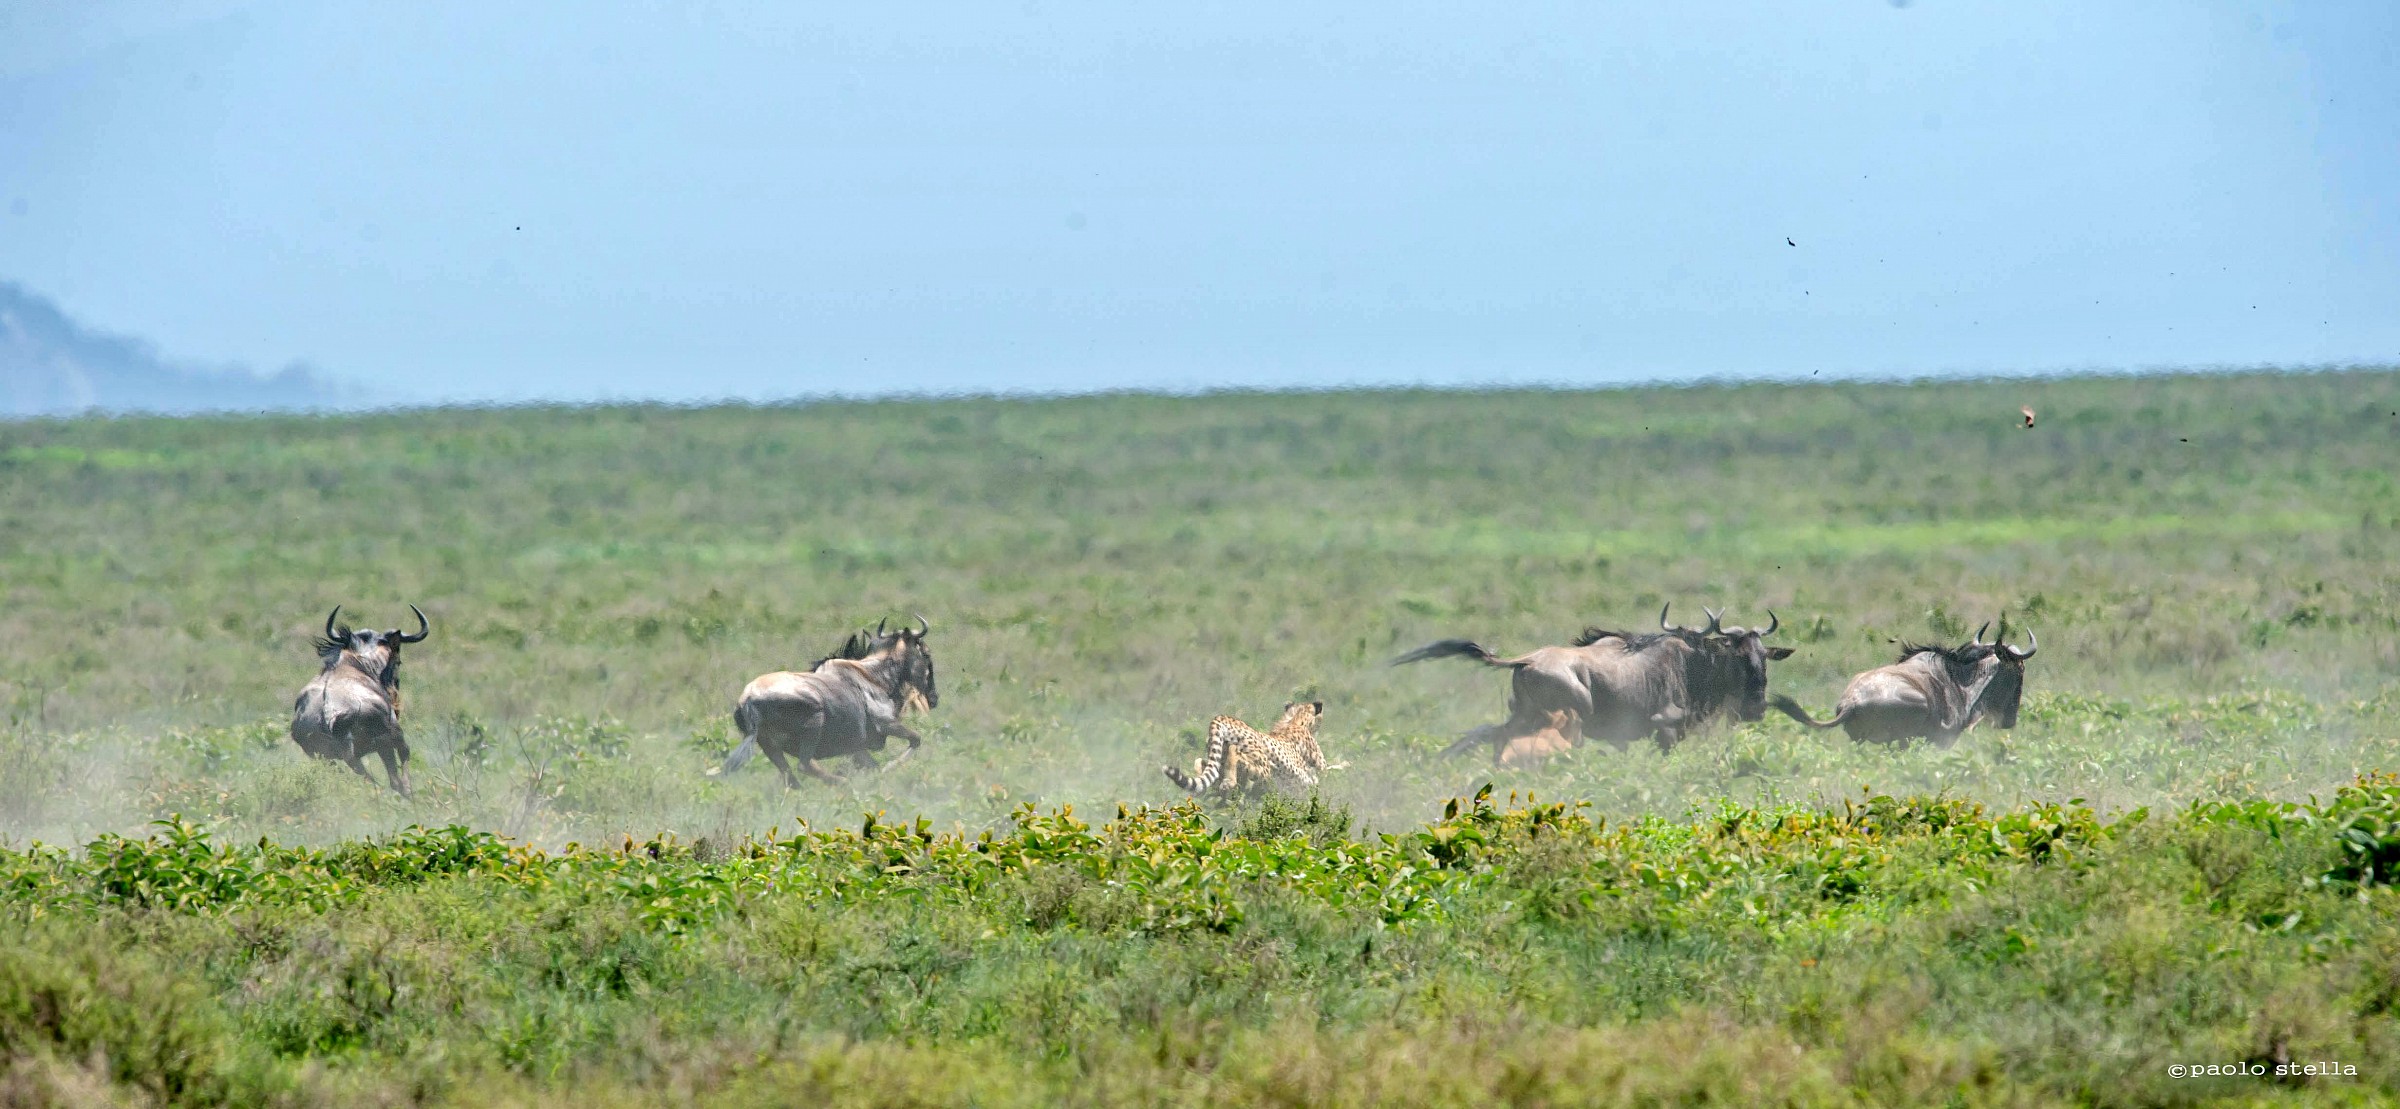 hunting in the Serengeti...